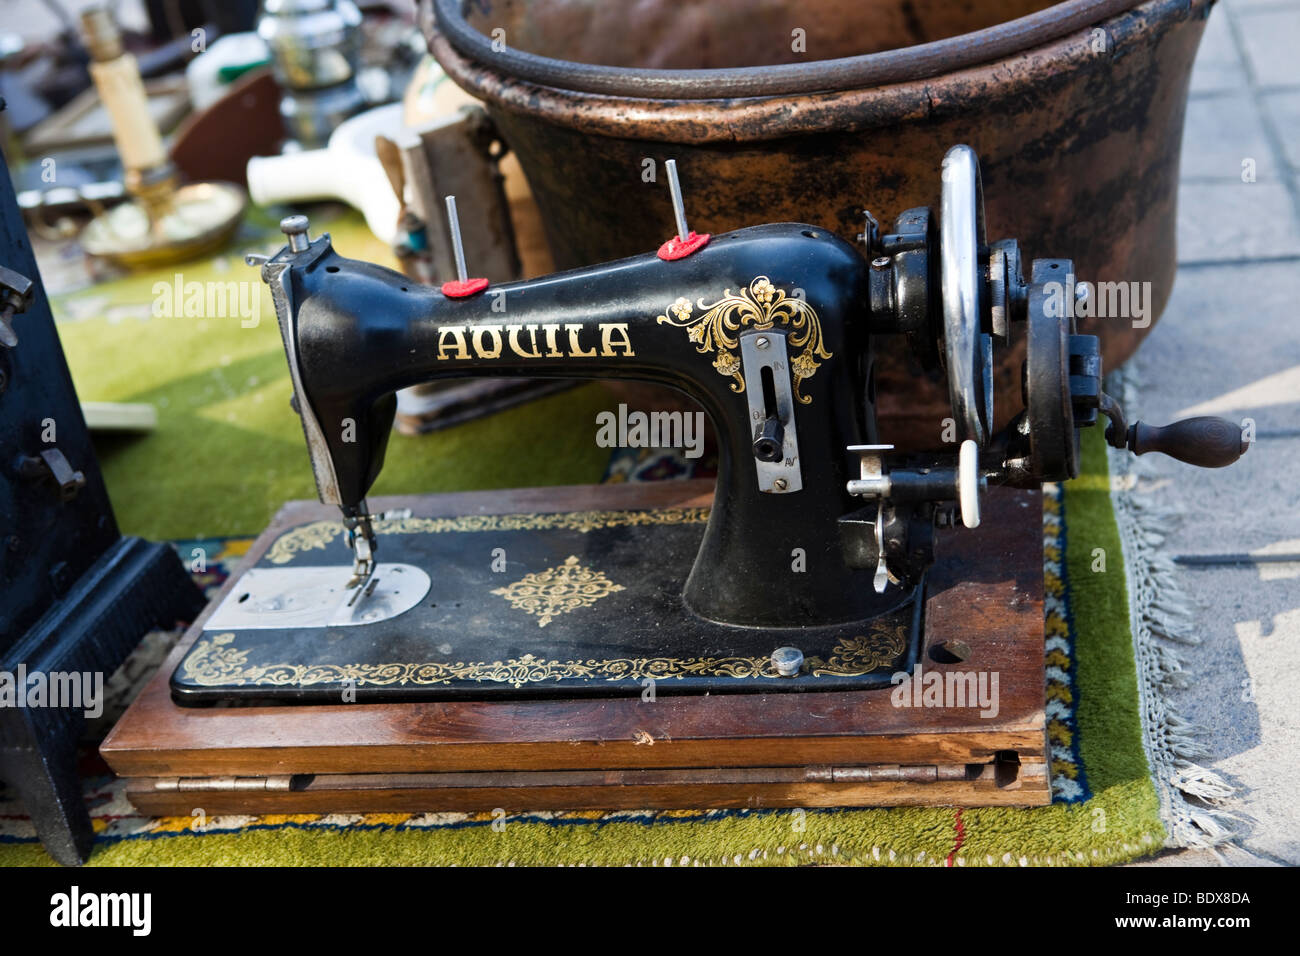 Old sewing machine "Aquila", Tuscany, Italy, Mediterranean Europe, EU. Stock Photo